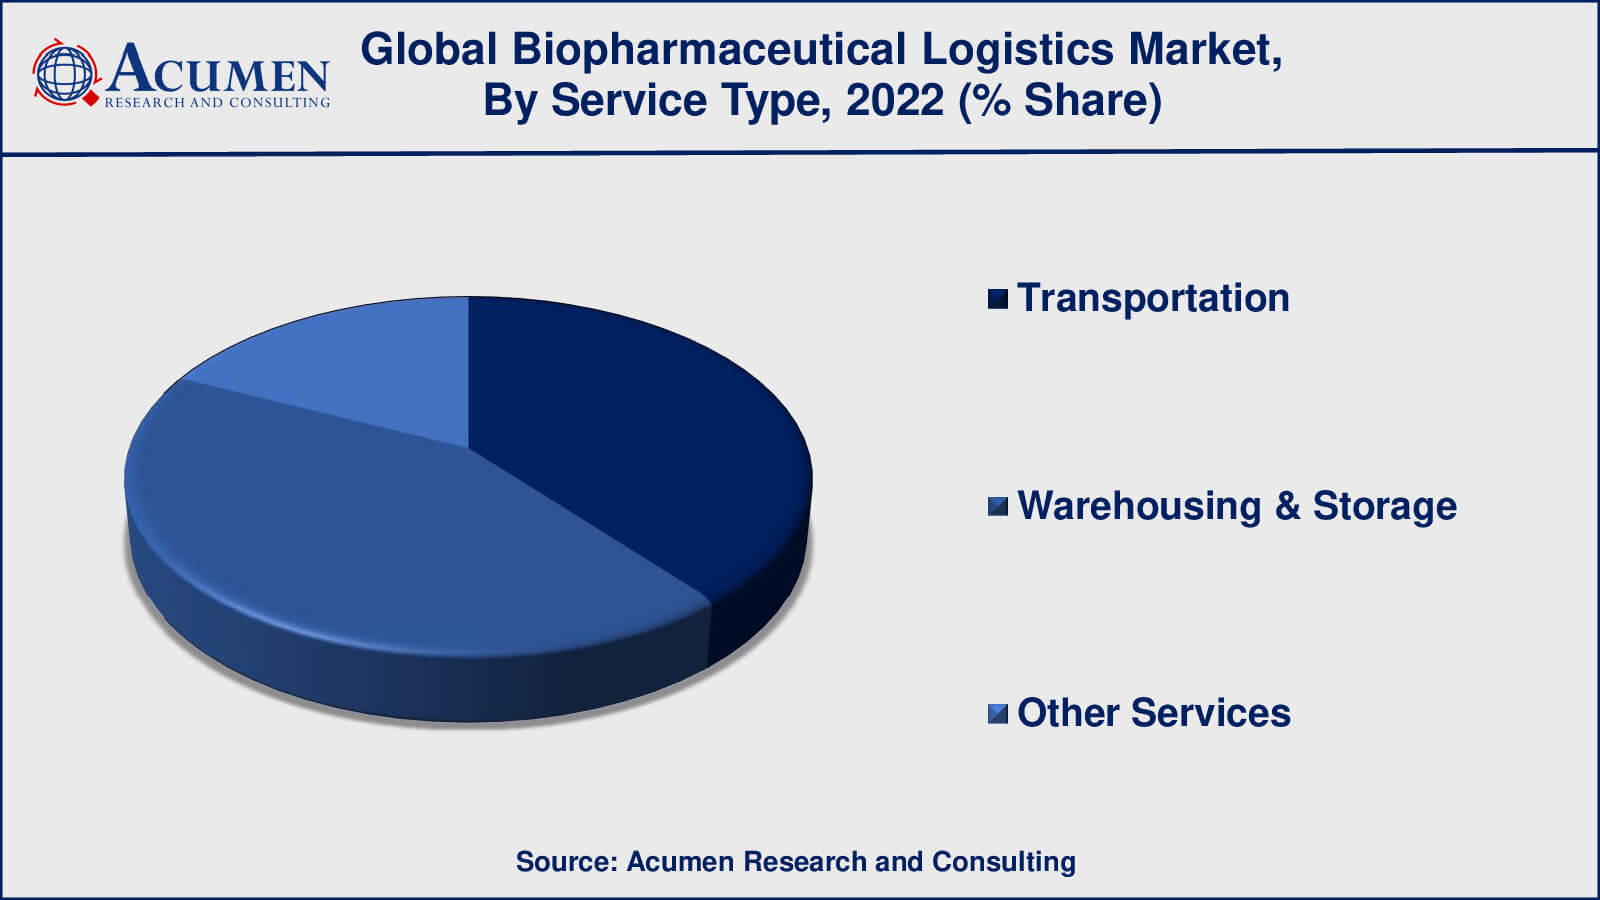 Biopharmaceutical Logistics Market Drivers